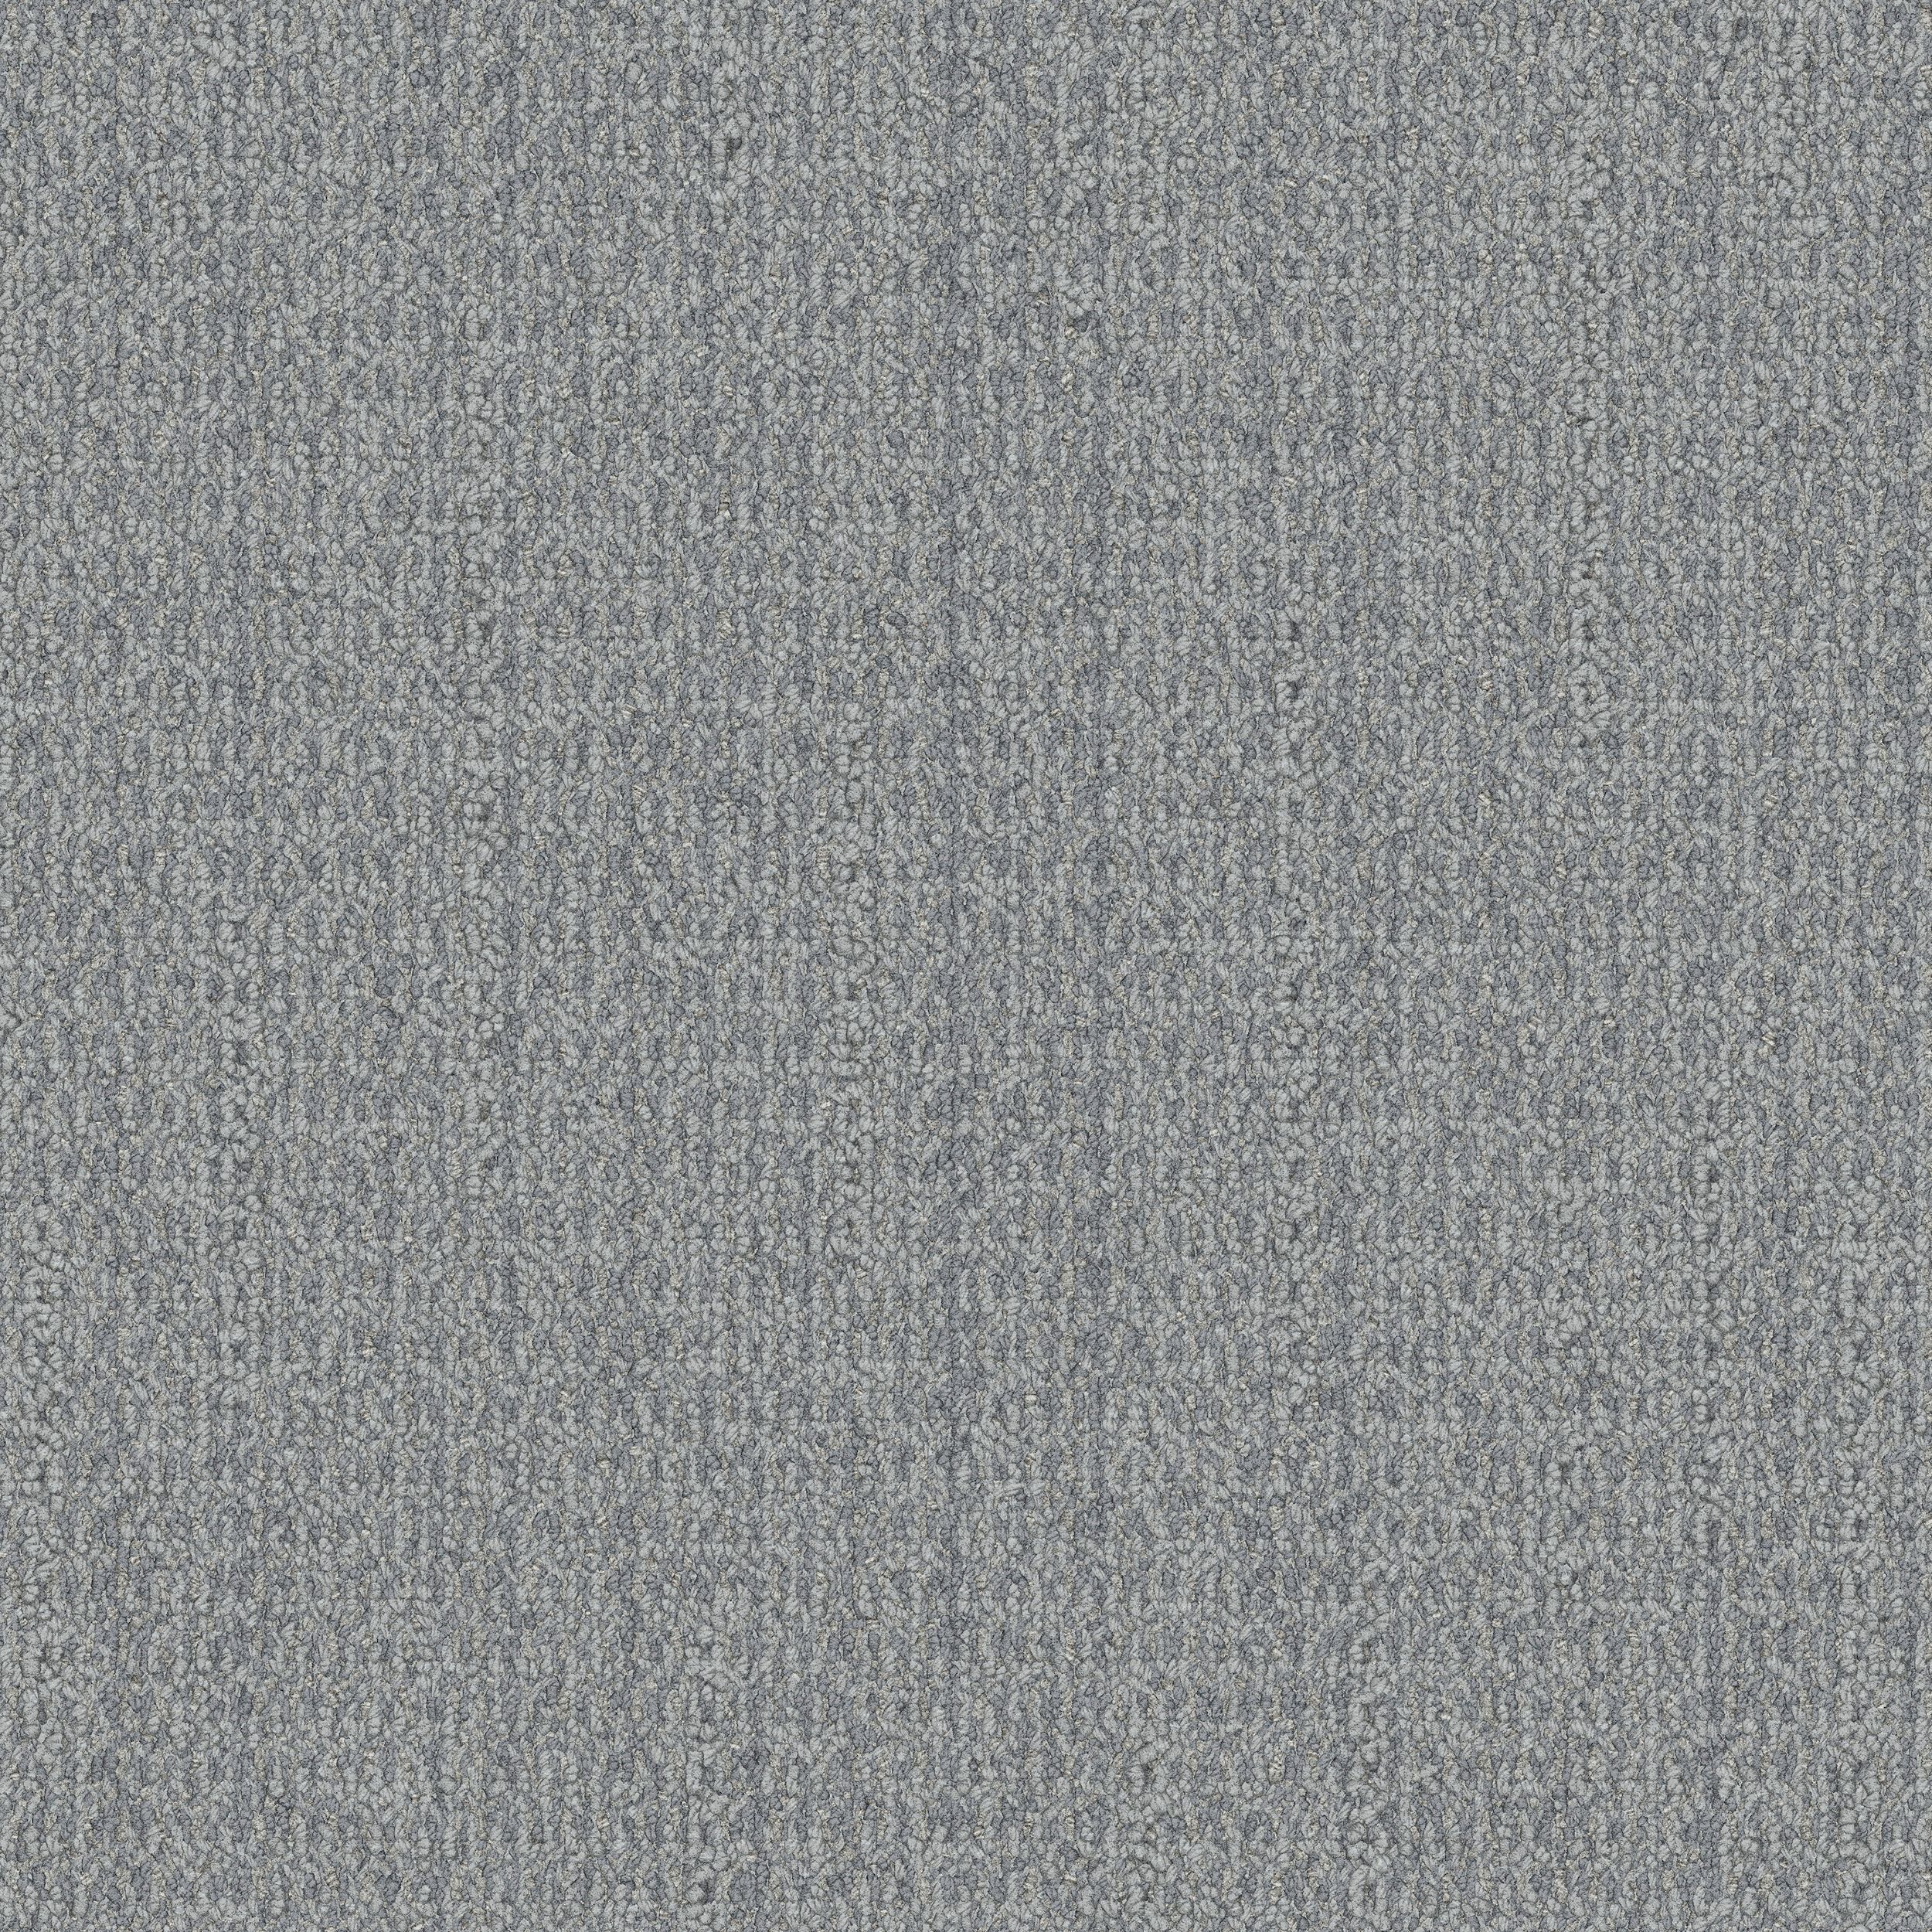 WG100 Carpet Tile In Stone número de imagen 1